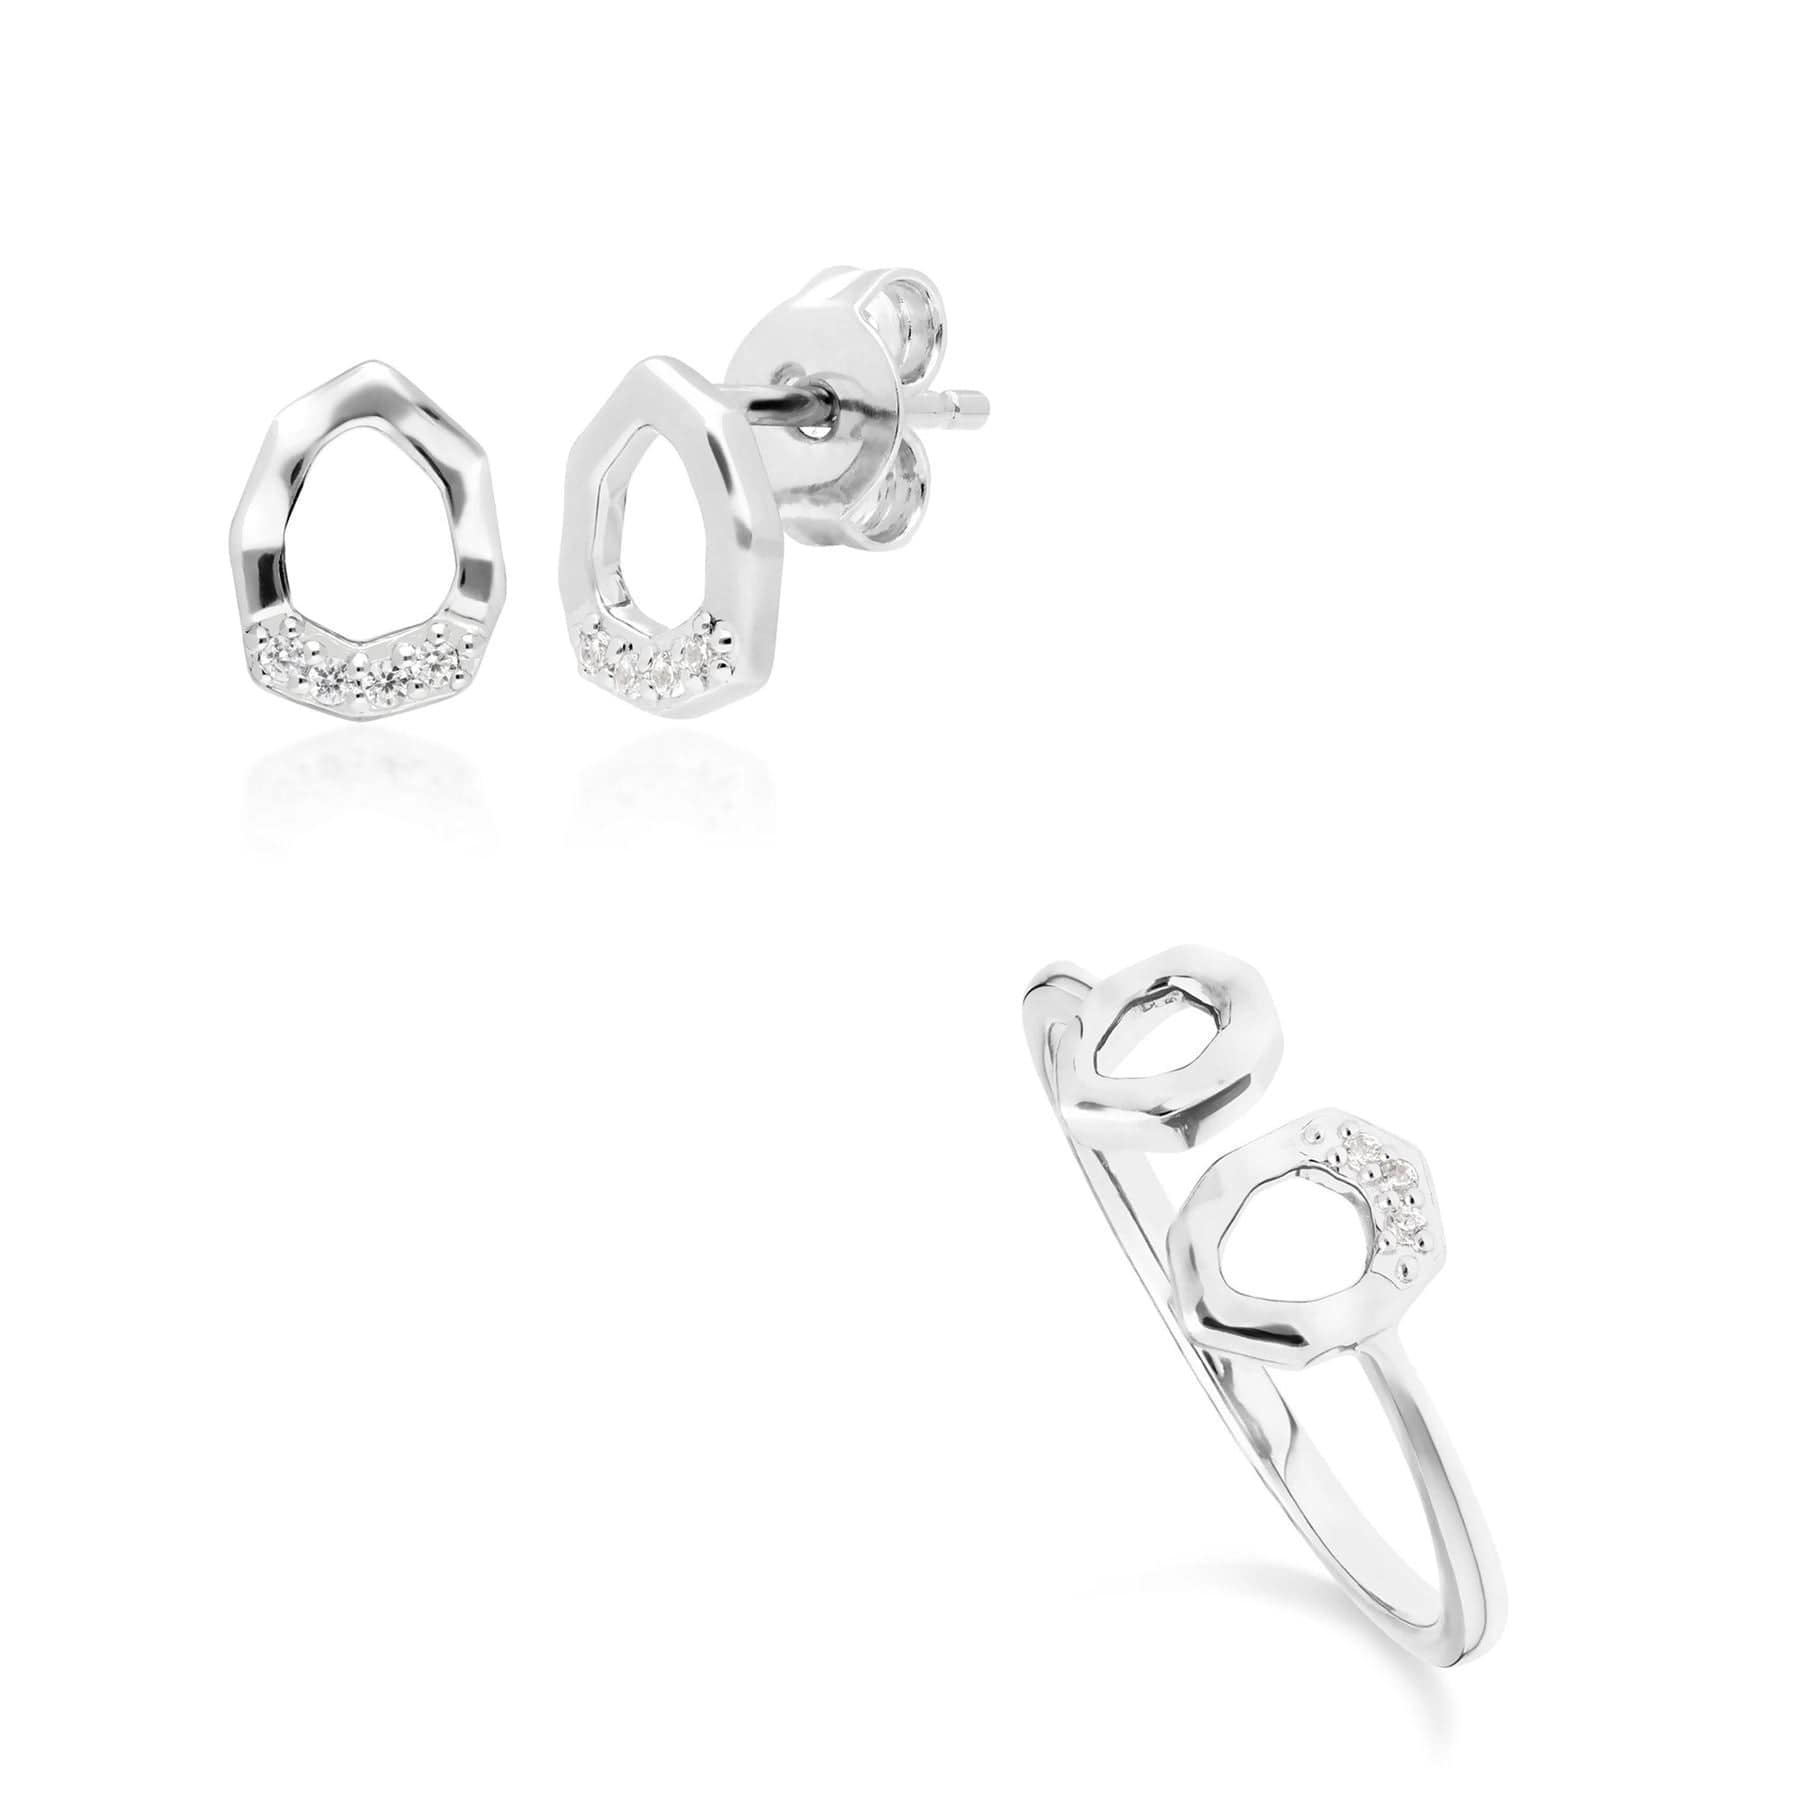 162E0269019-162R0391019 Diamond Pave Asymmetrical Stud Earring & Ring Set in 9ct White Gold 1